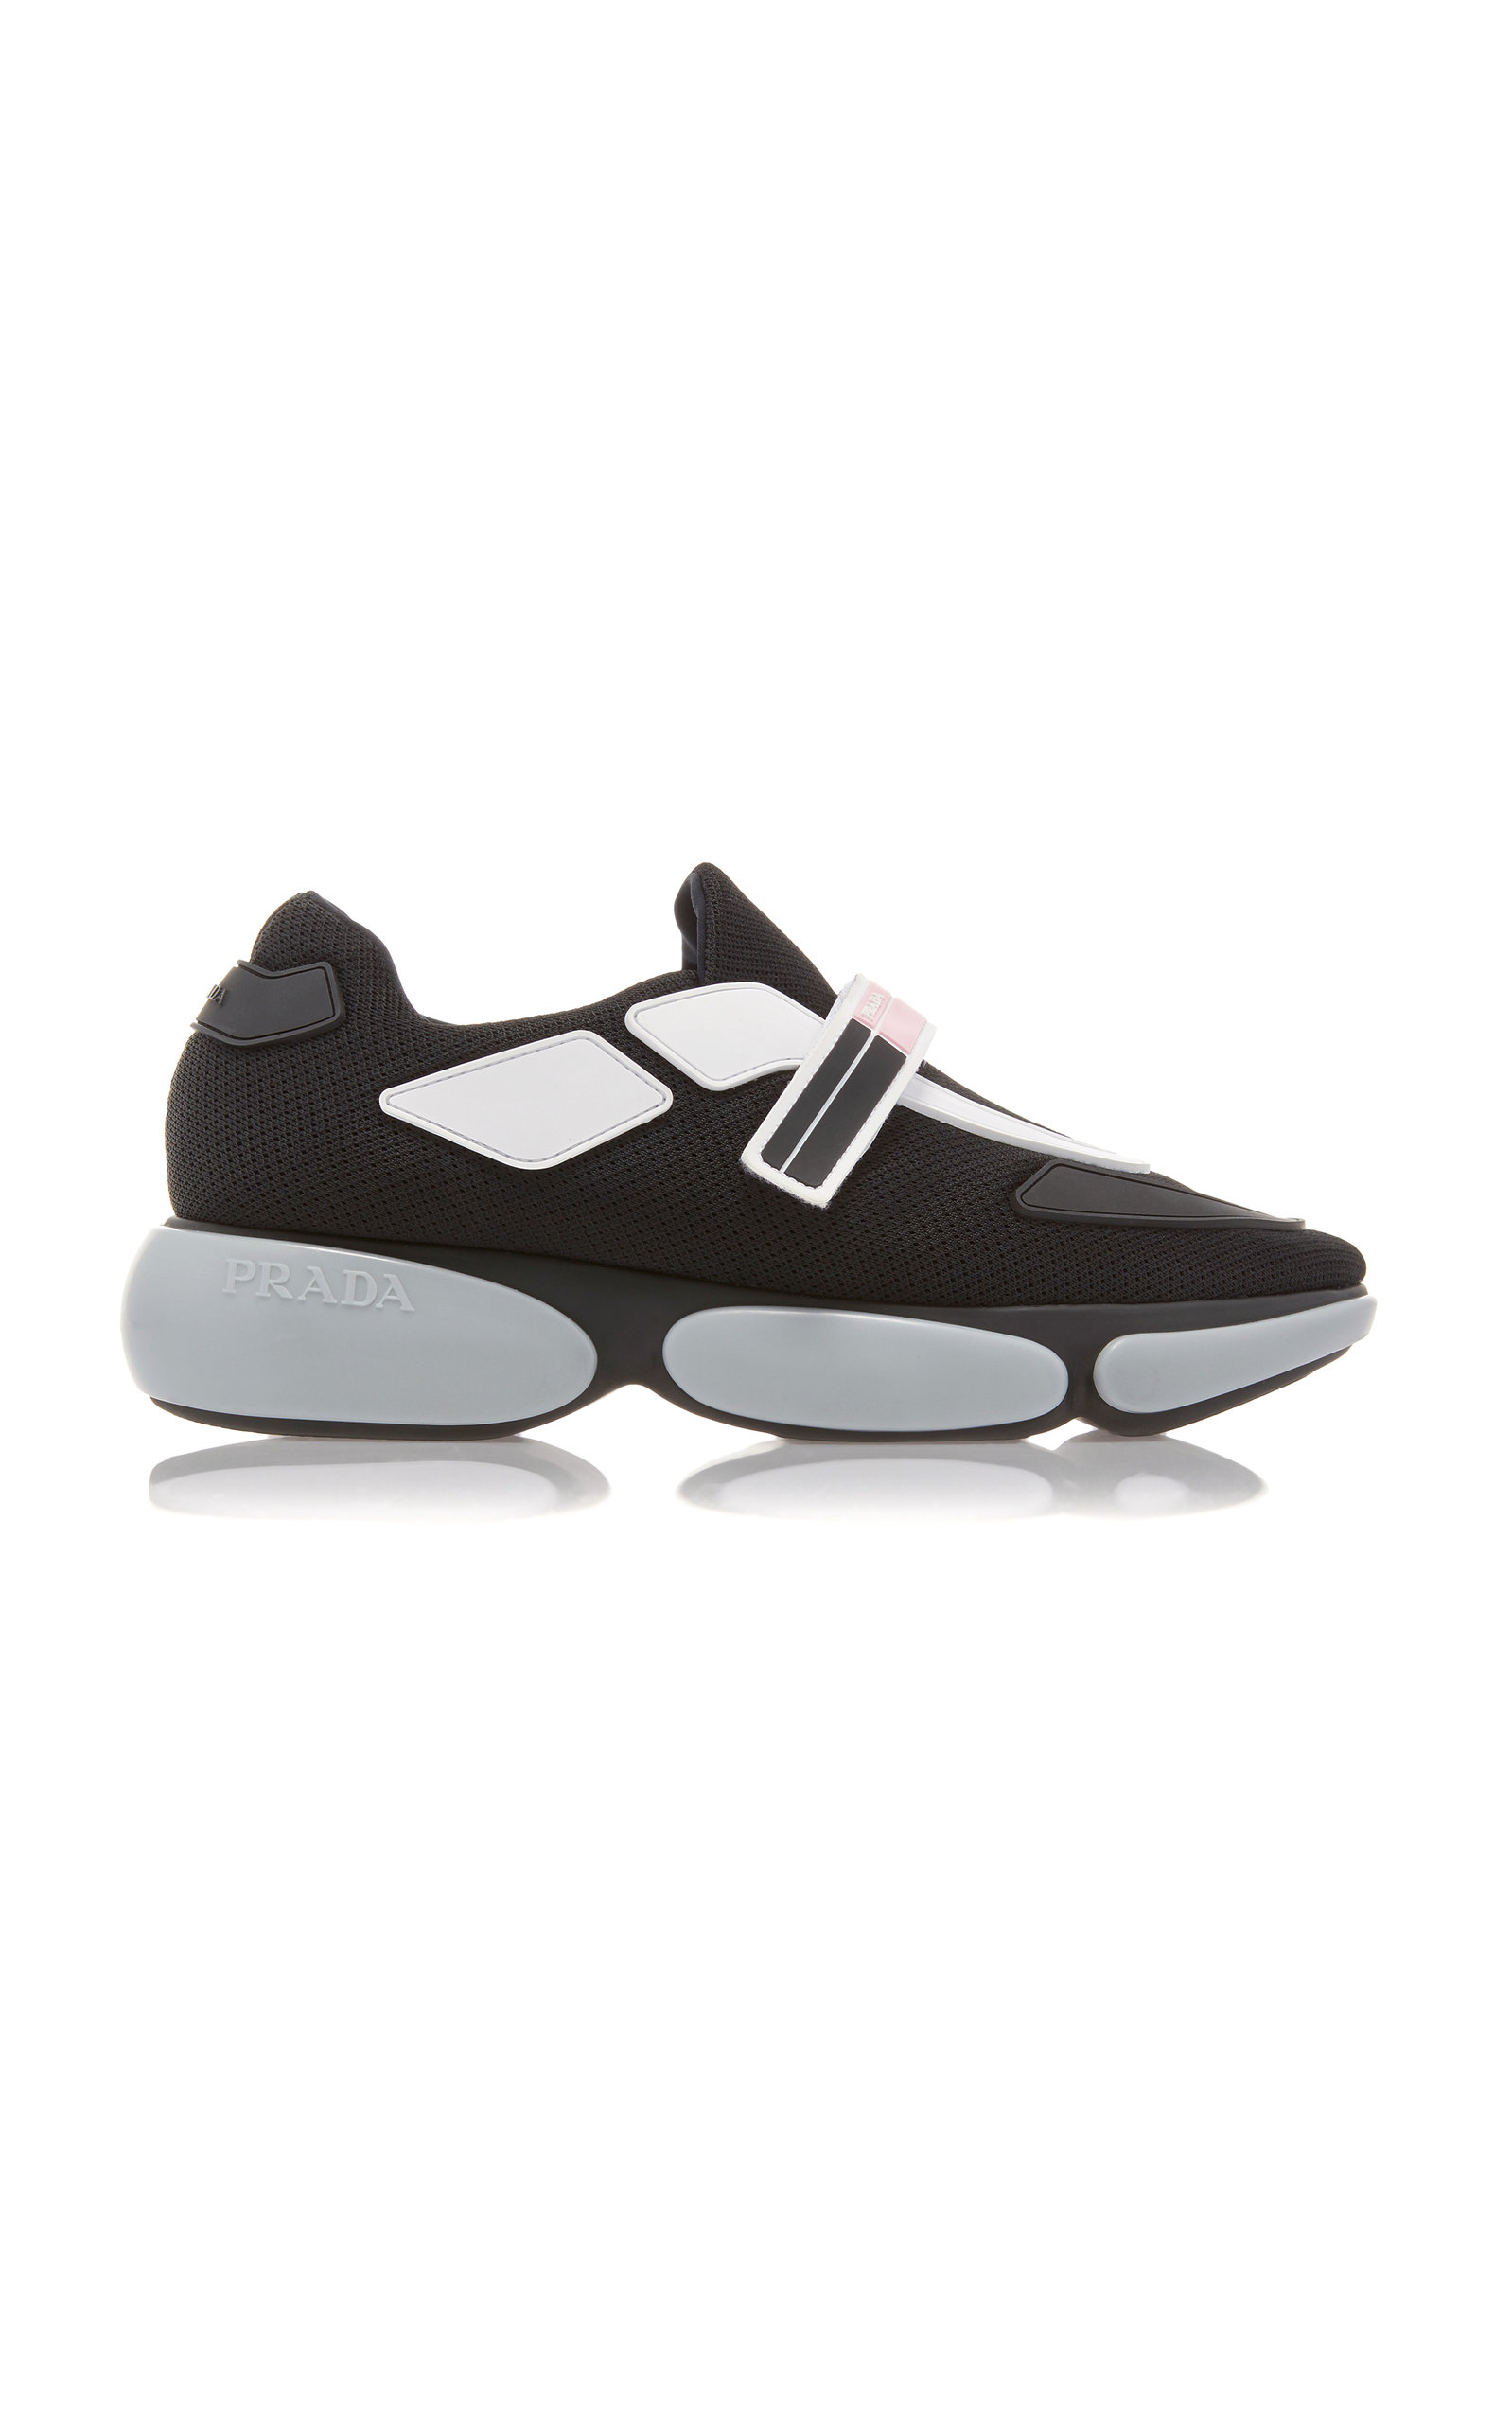 Prada - Women's Cloudbust Rubber and Leather-Trimmed Mesh Sneakers - Black - IT 38 - Moda Operandi